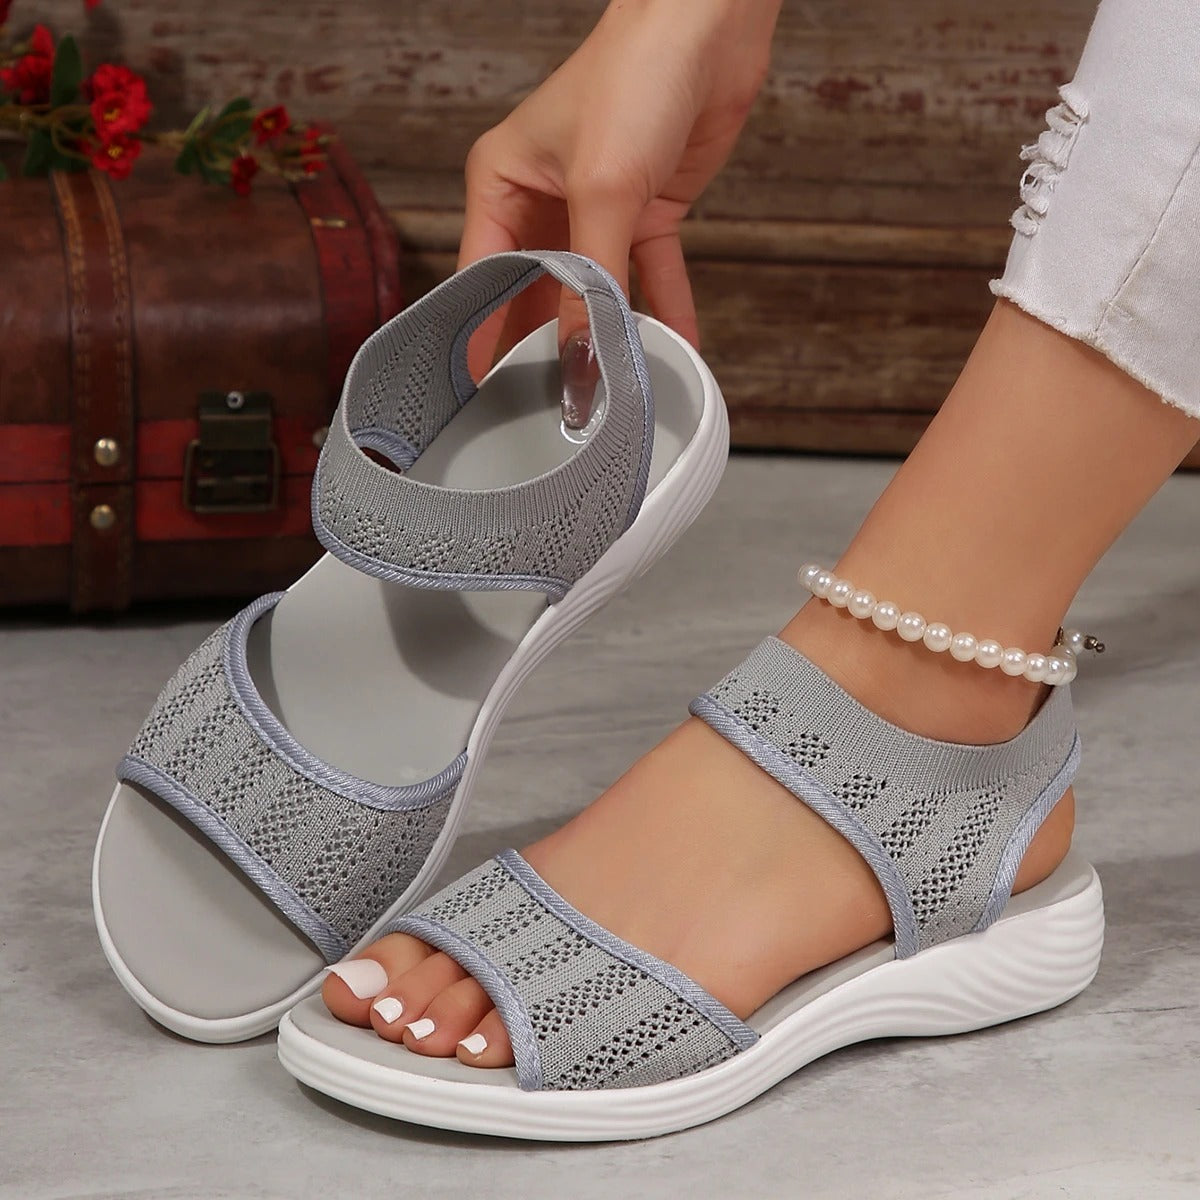 Aerol Mesh Flats Casual Sandal Shoes